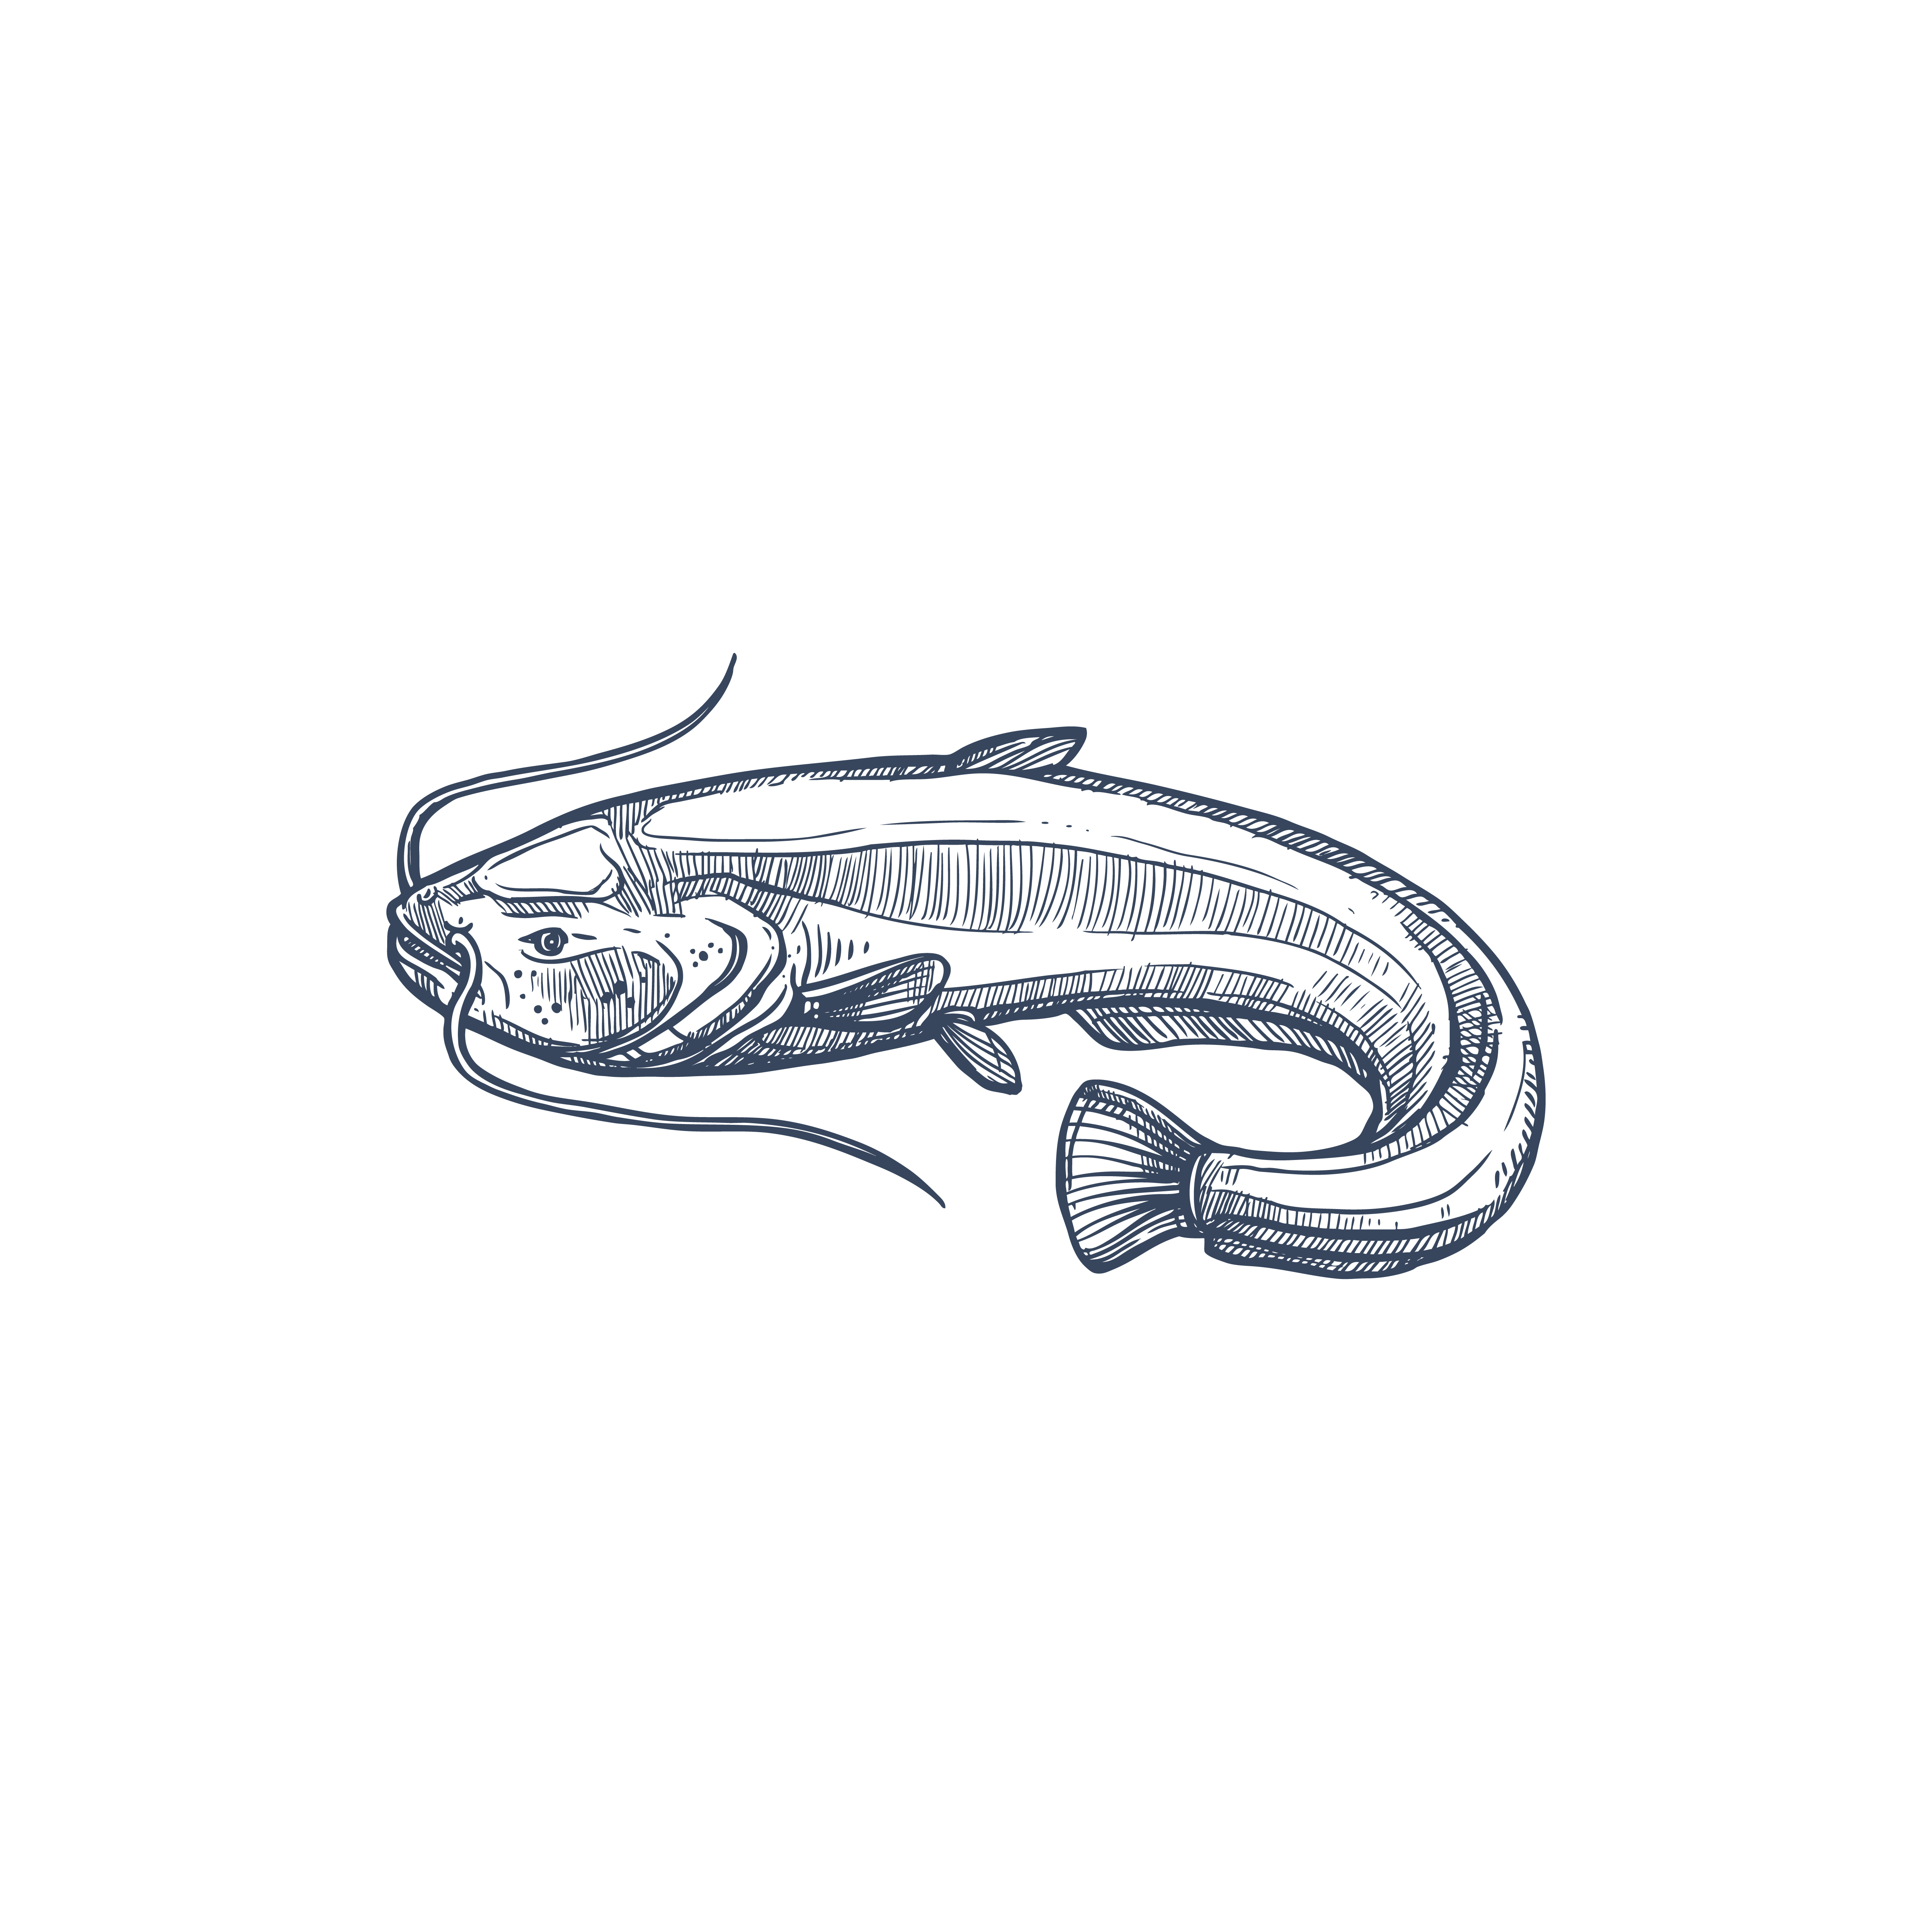 Sheatfish isolated common catfish monochrome sketch. Vector Siluridae species, ray-finished catfishes order Siluriformes or Nematognath. Mekong giant catfish, Candiru toothpick fish with whiskers. Catfish or sheatfish isolated ray-finished fish